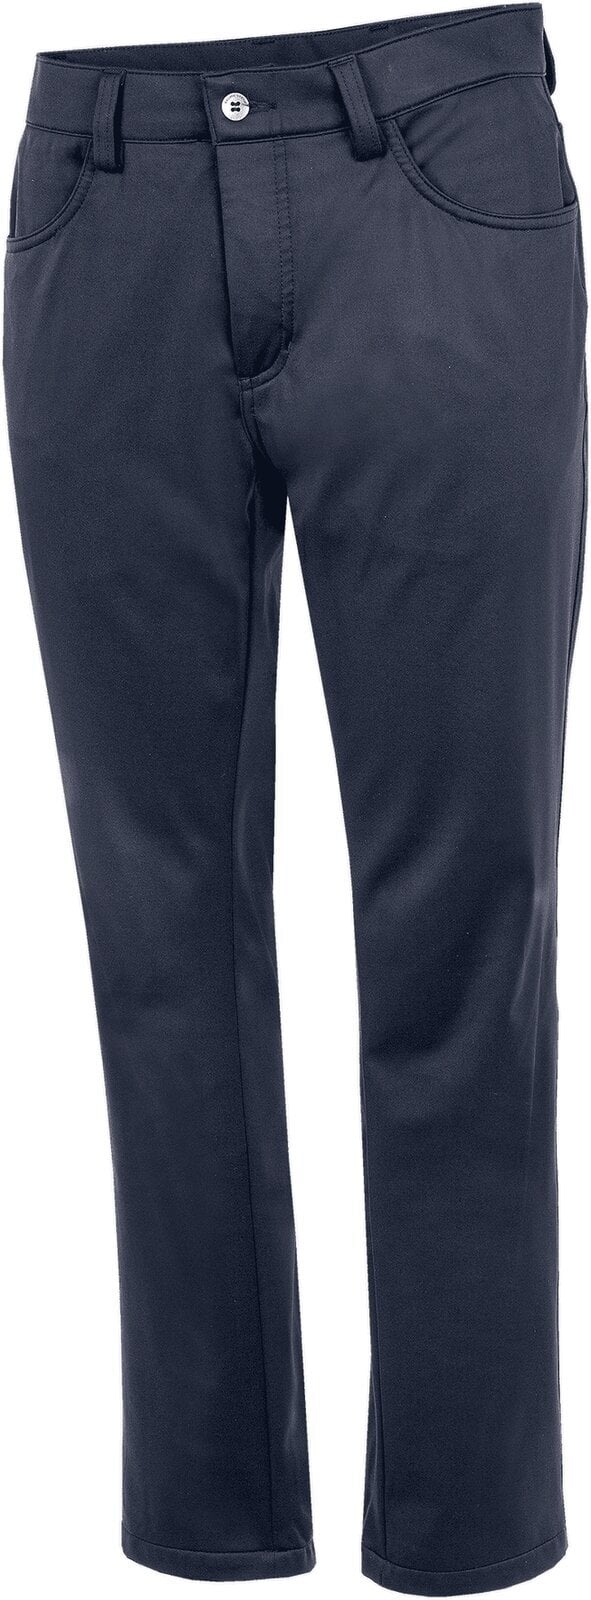 Pantaloni Galvin Green Lane MensWindproof And Water Repellent Pants Navy 34/32